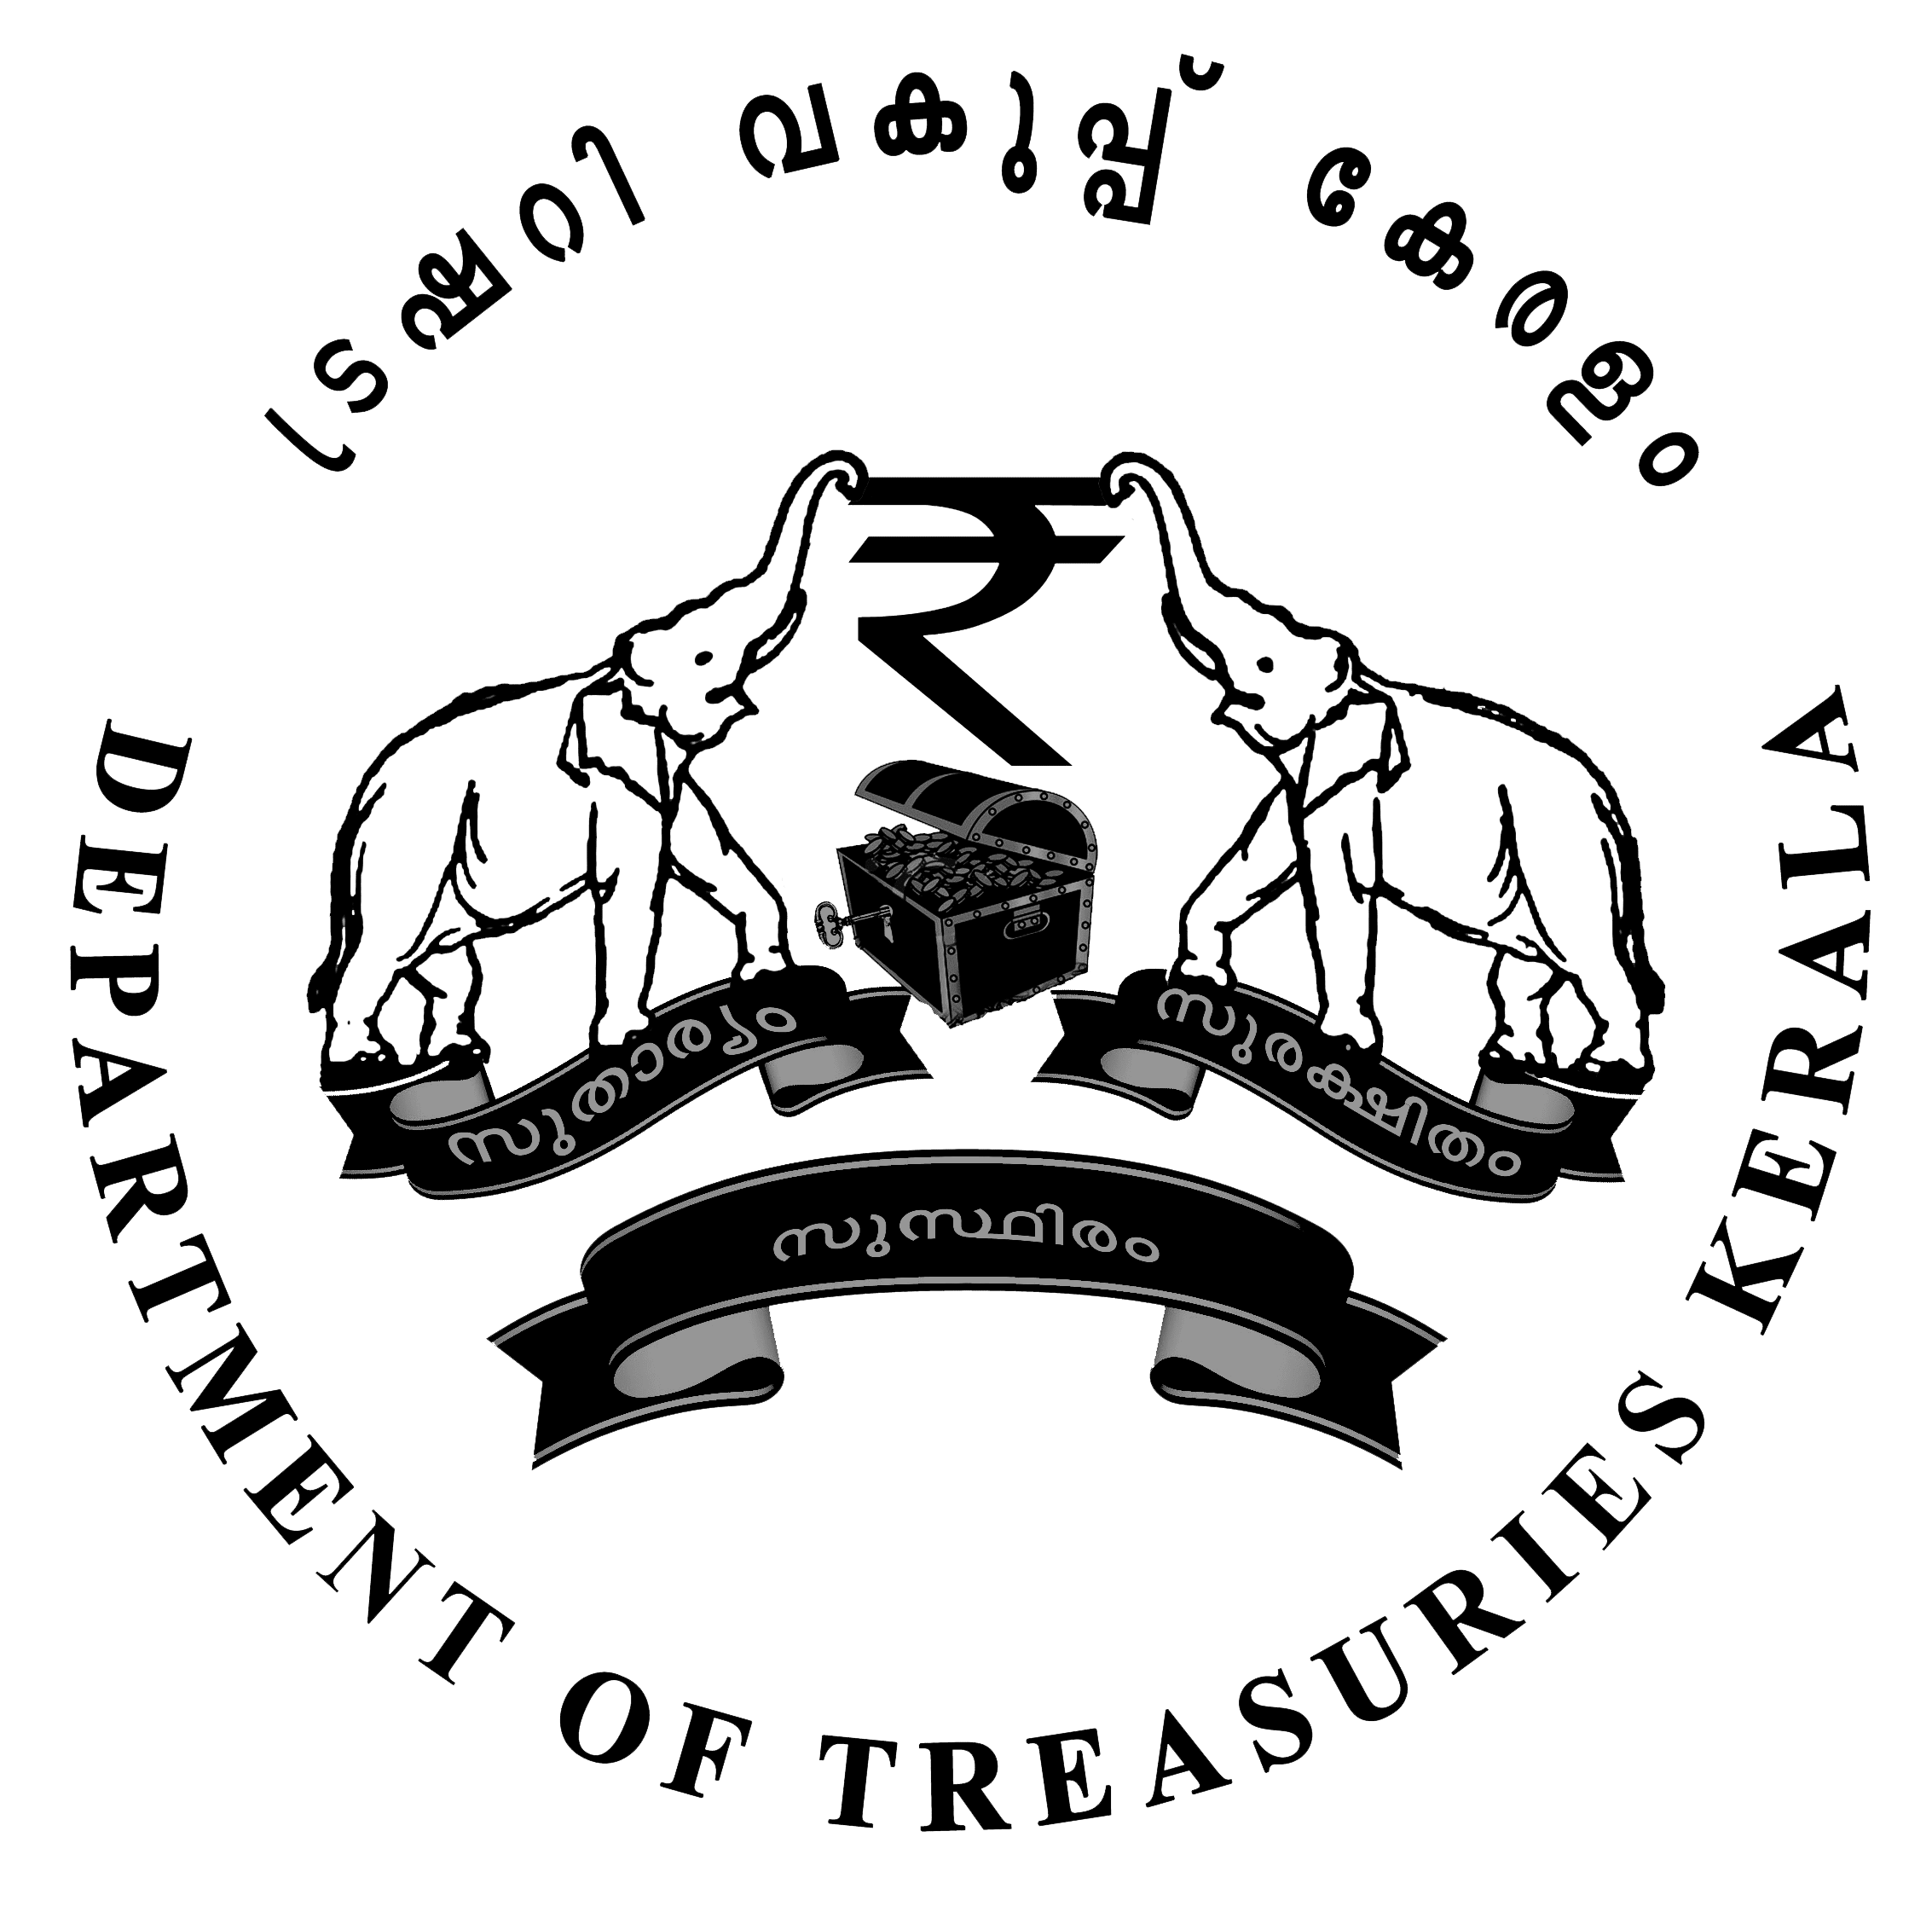 Department of Treasuries